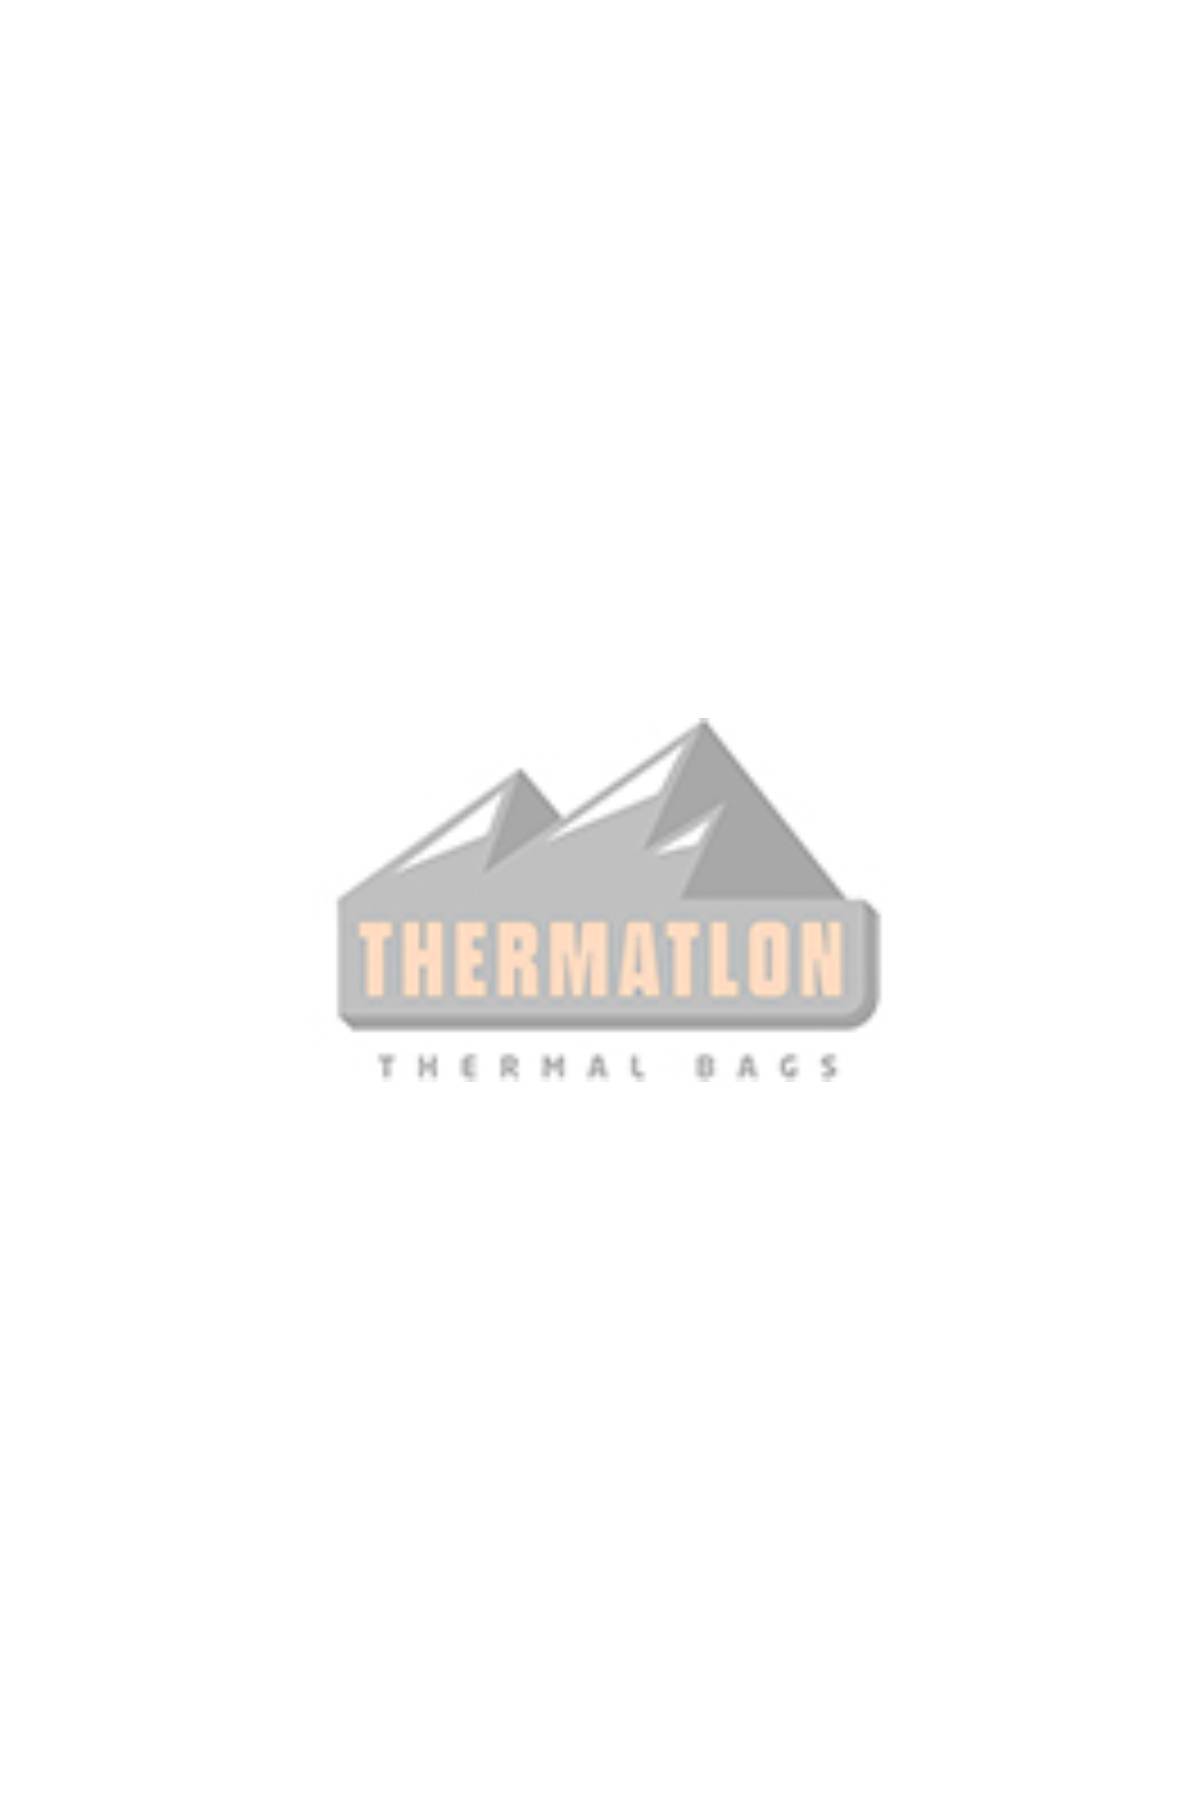 Thermatlon Picnic Cooler 8 LT